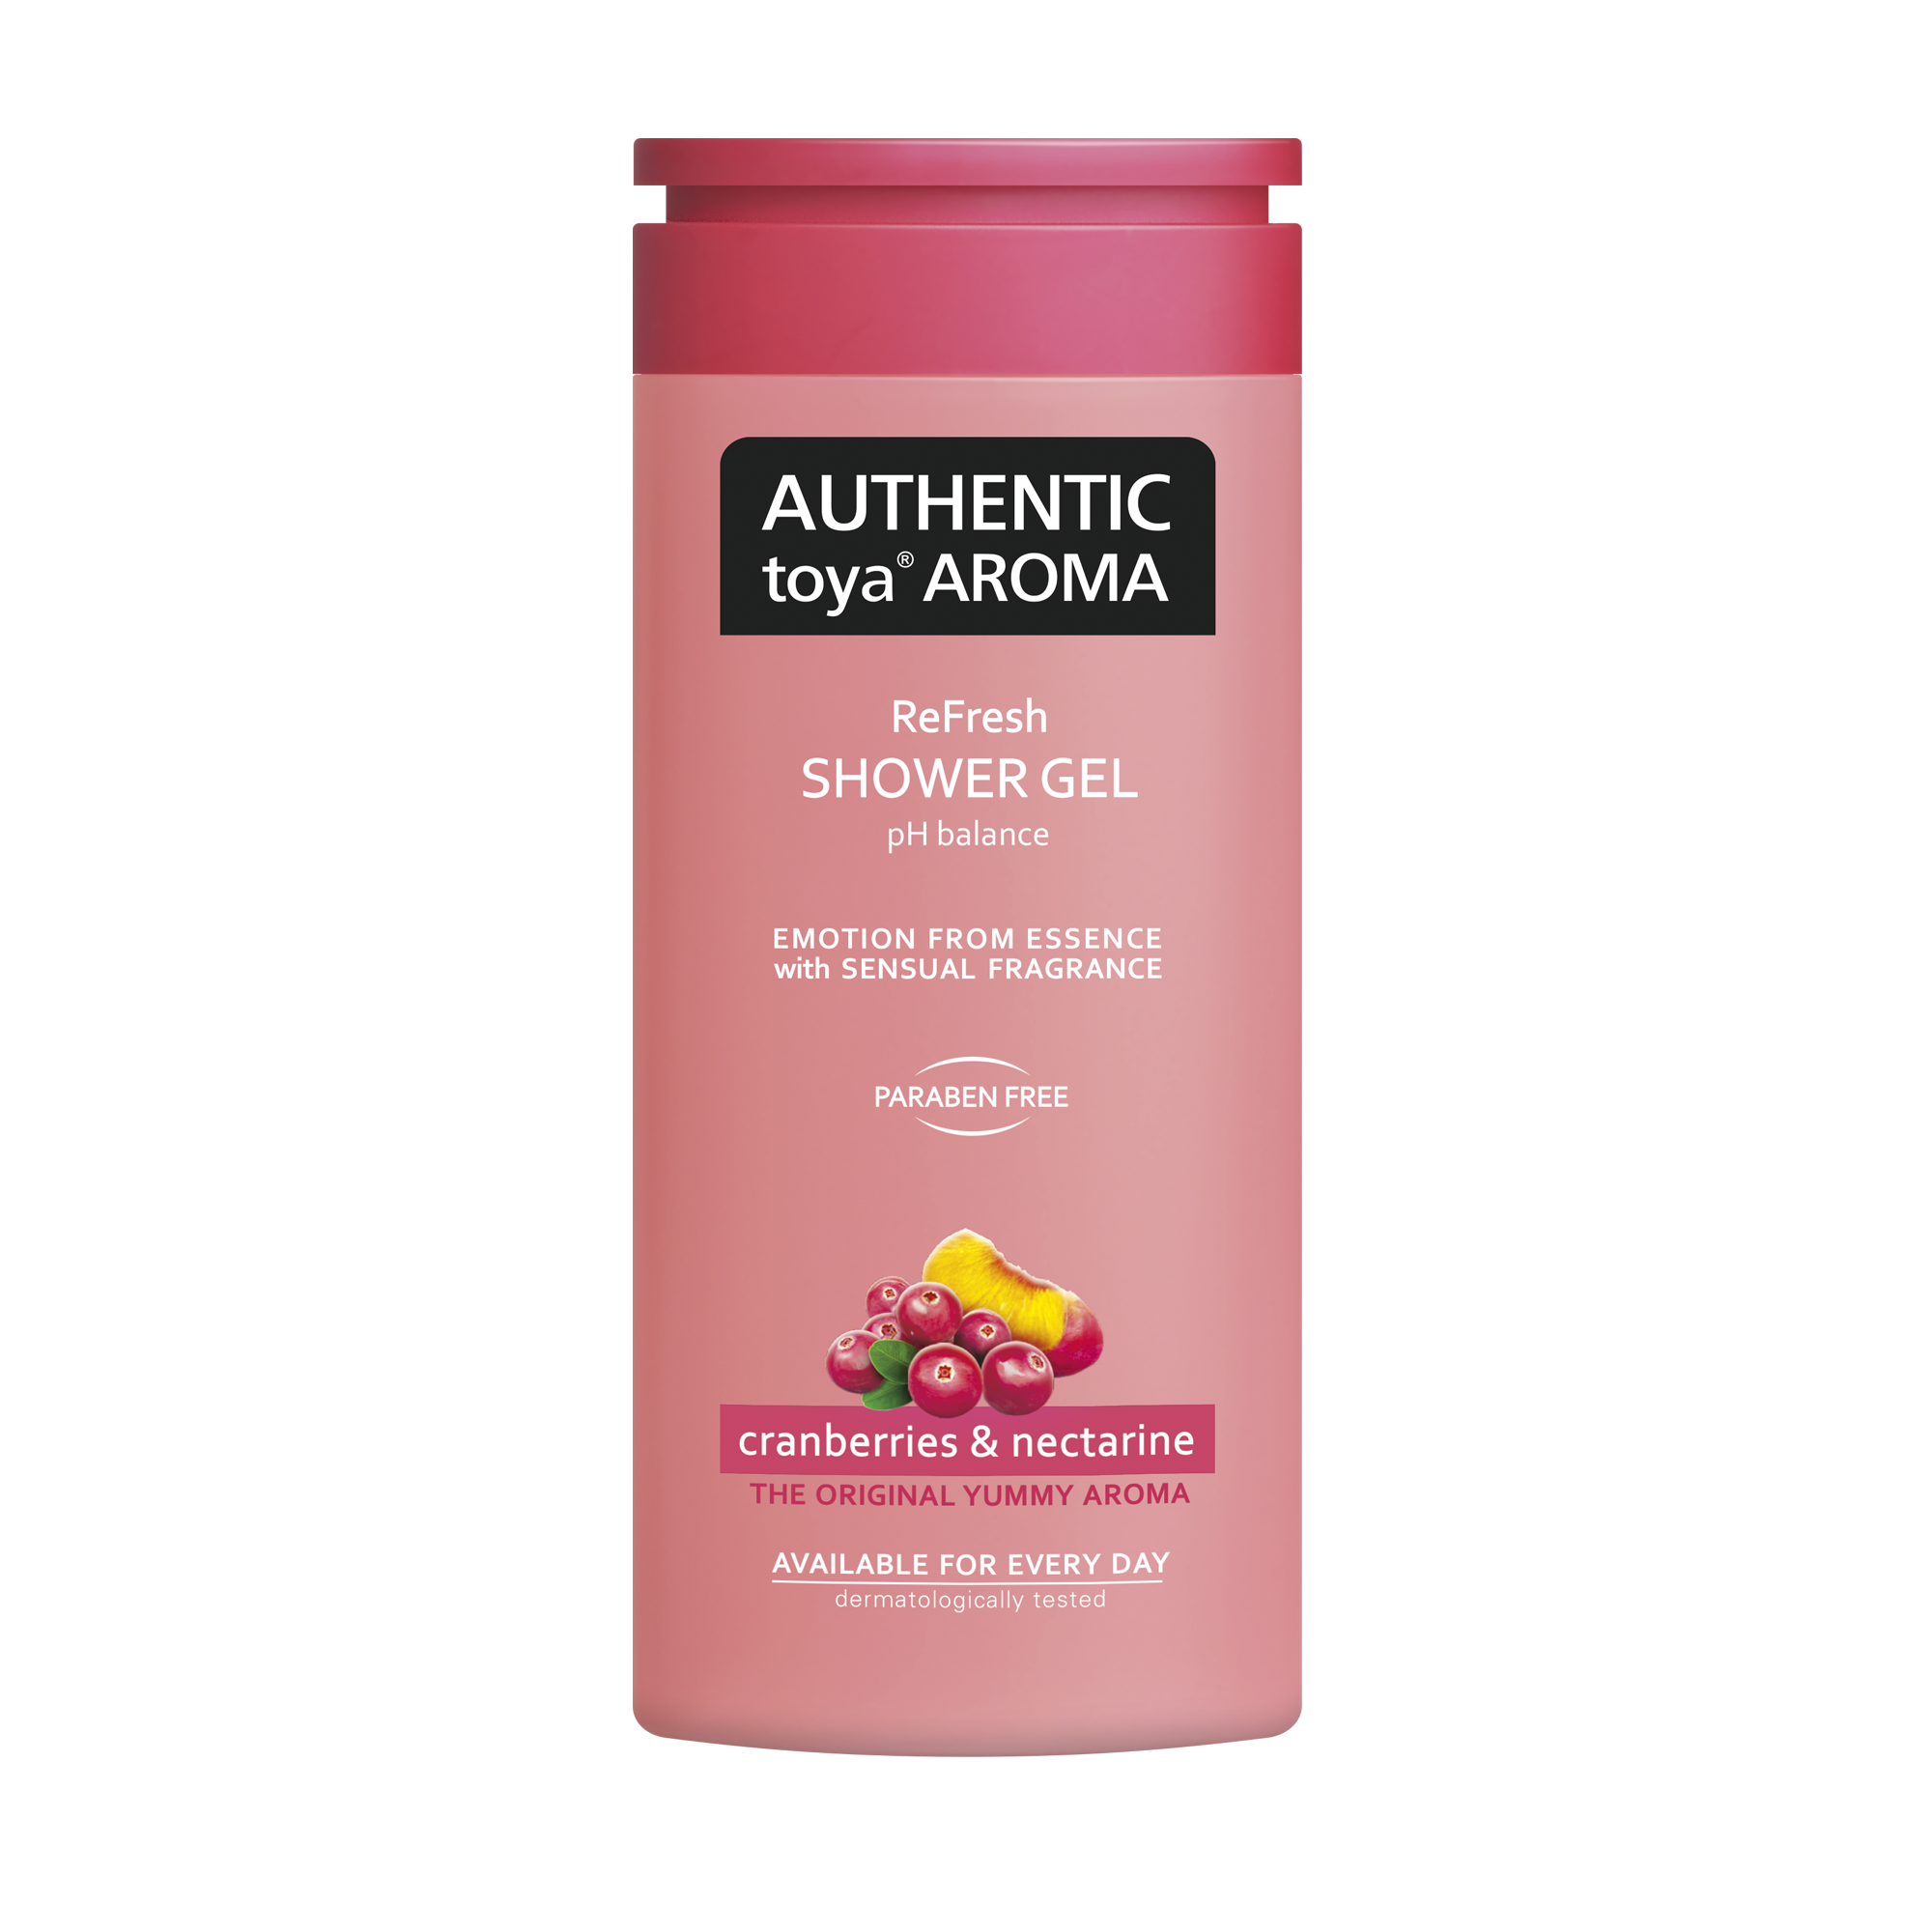 AUTHENTIC toya AROMA – sprchový gél cranberries & nectarine 